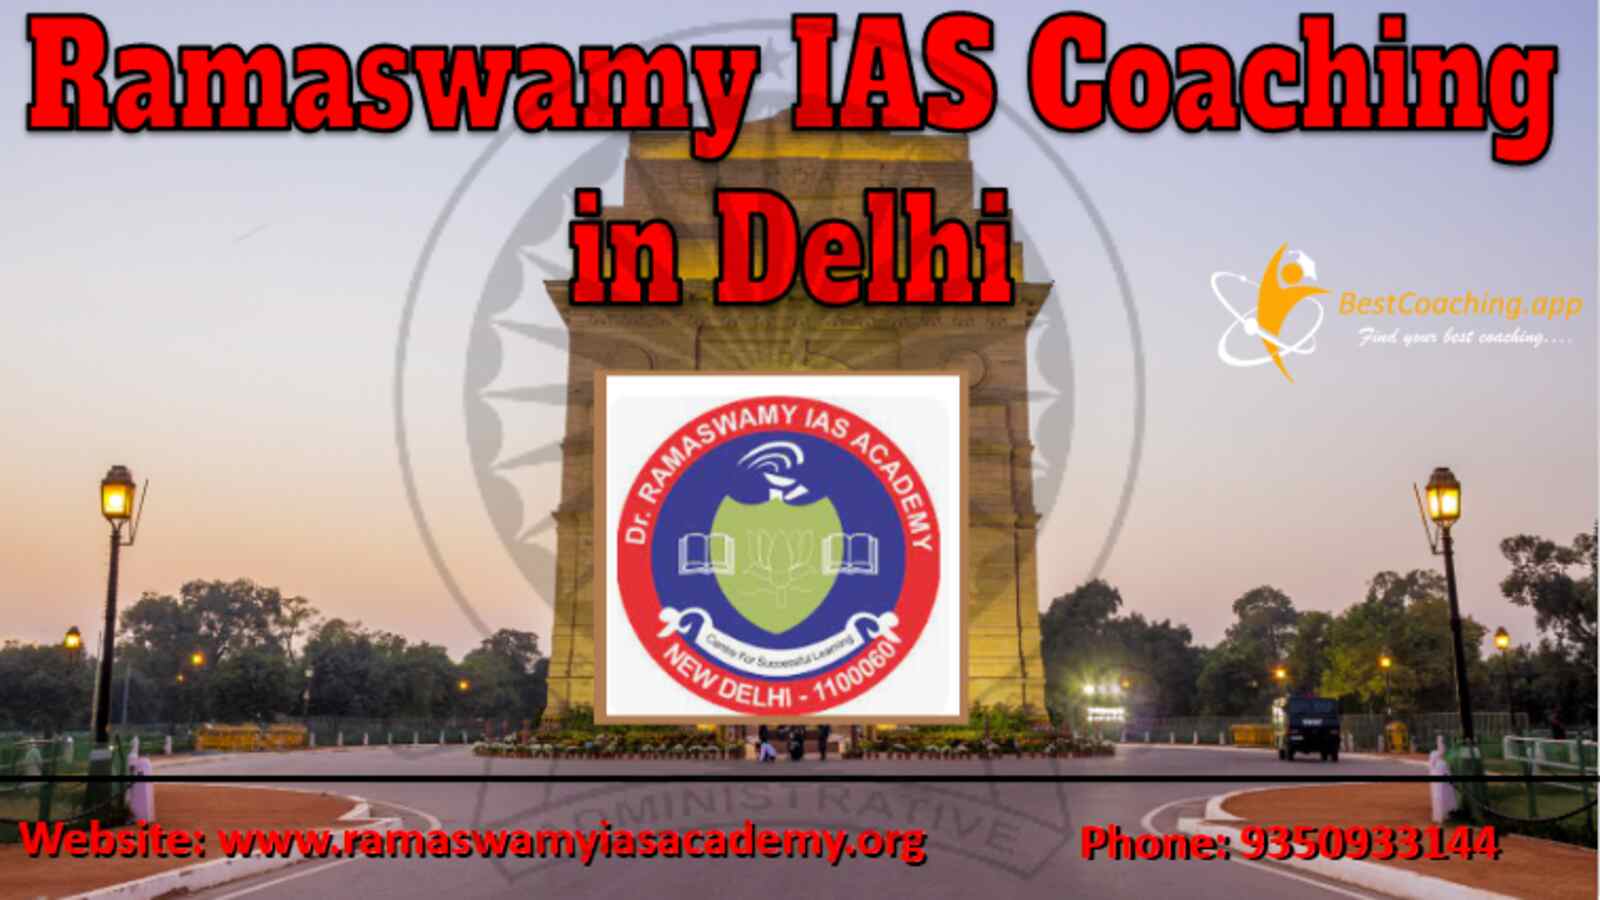 Ramaswamy IAS Coaching in Delhi